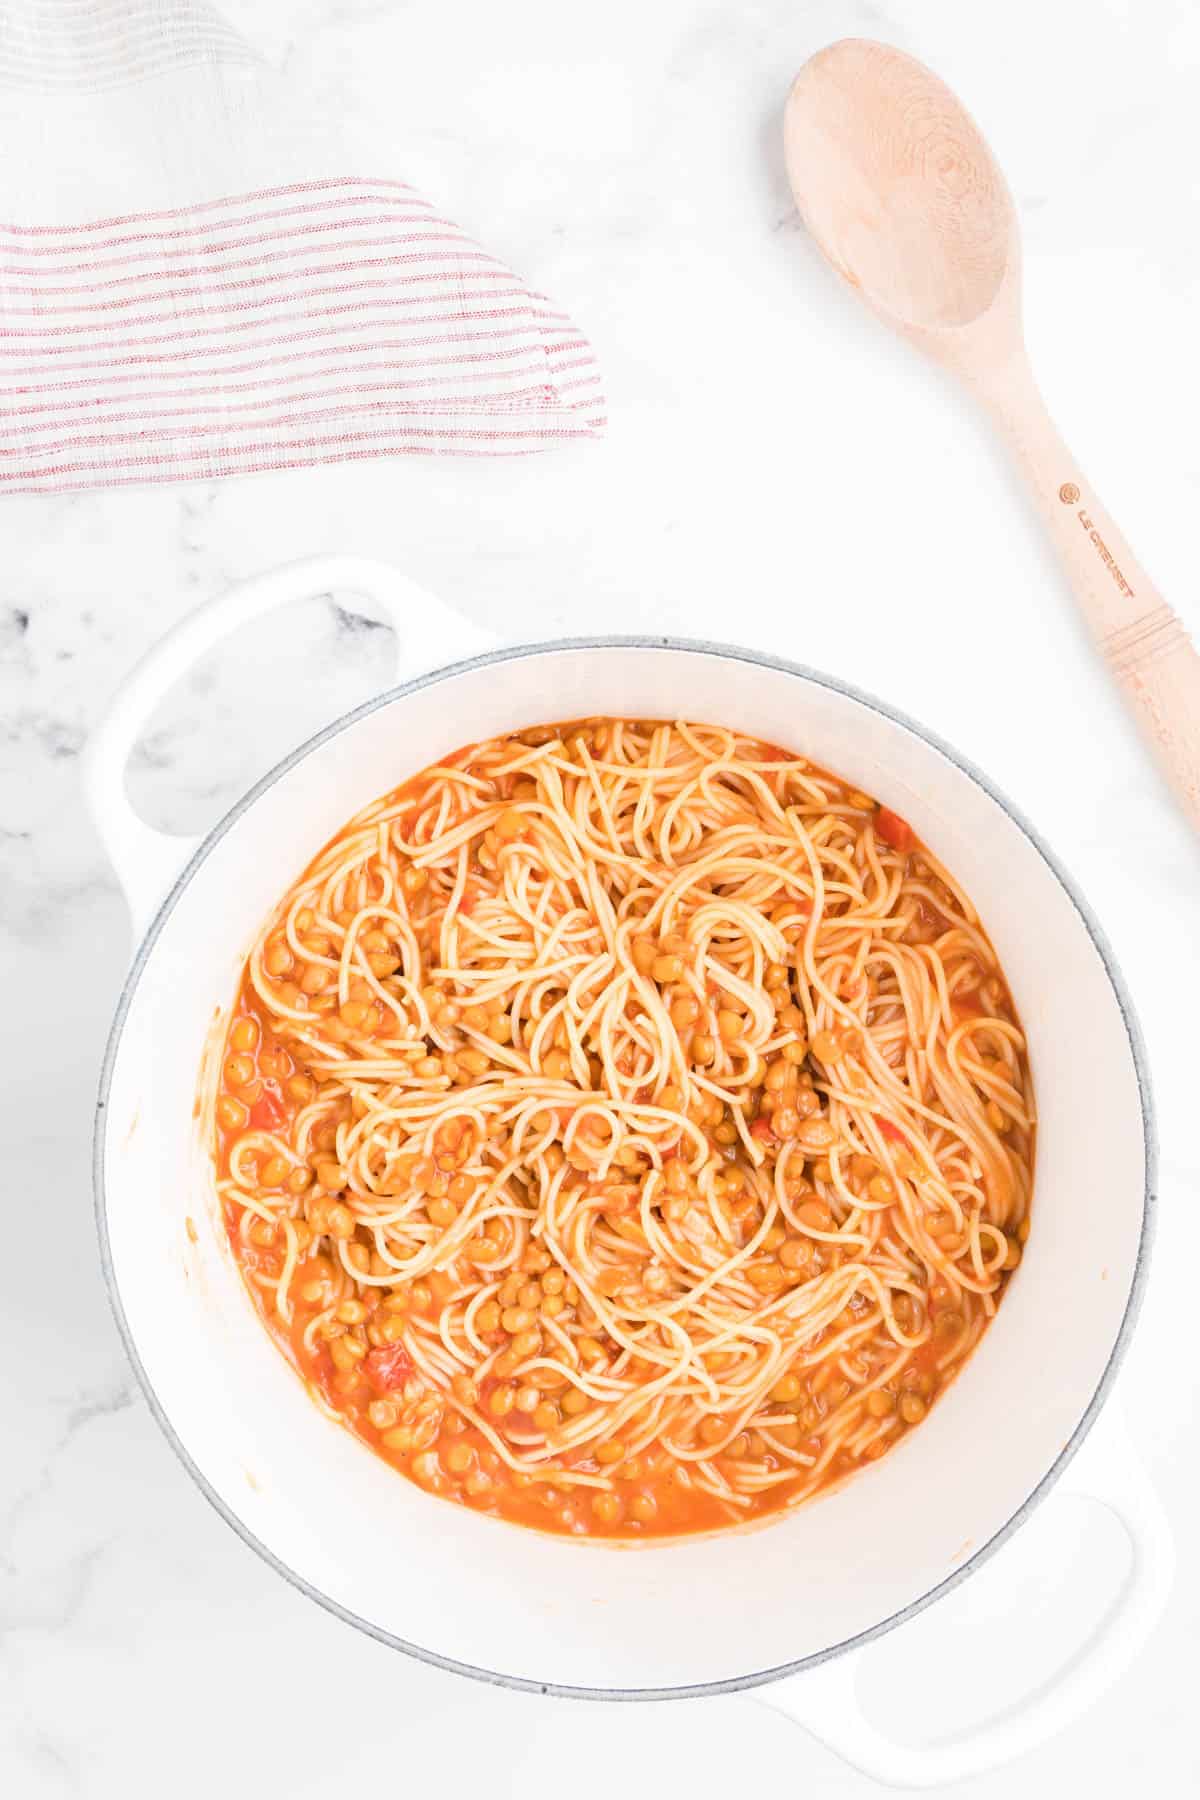 Pasta, creamy tomato sauce, and lentils in a white pot.